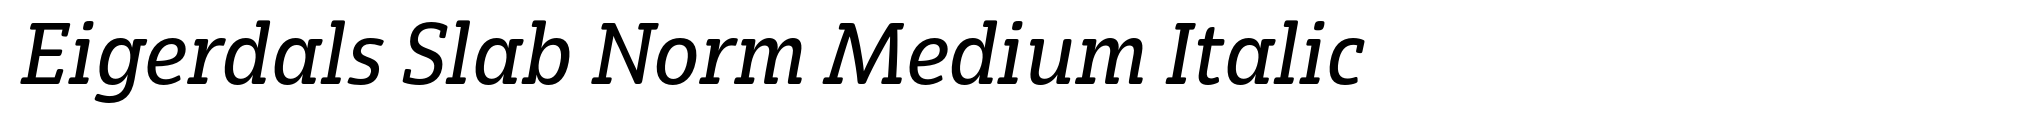 Eigerdals Slab Norm Medium Italic image